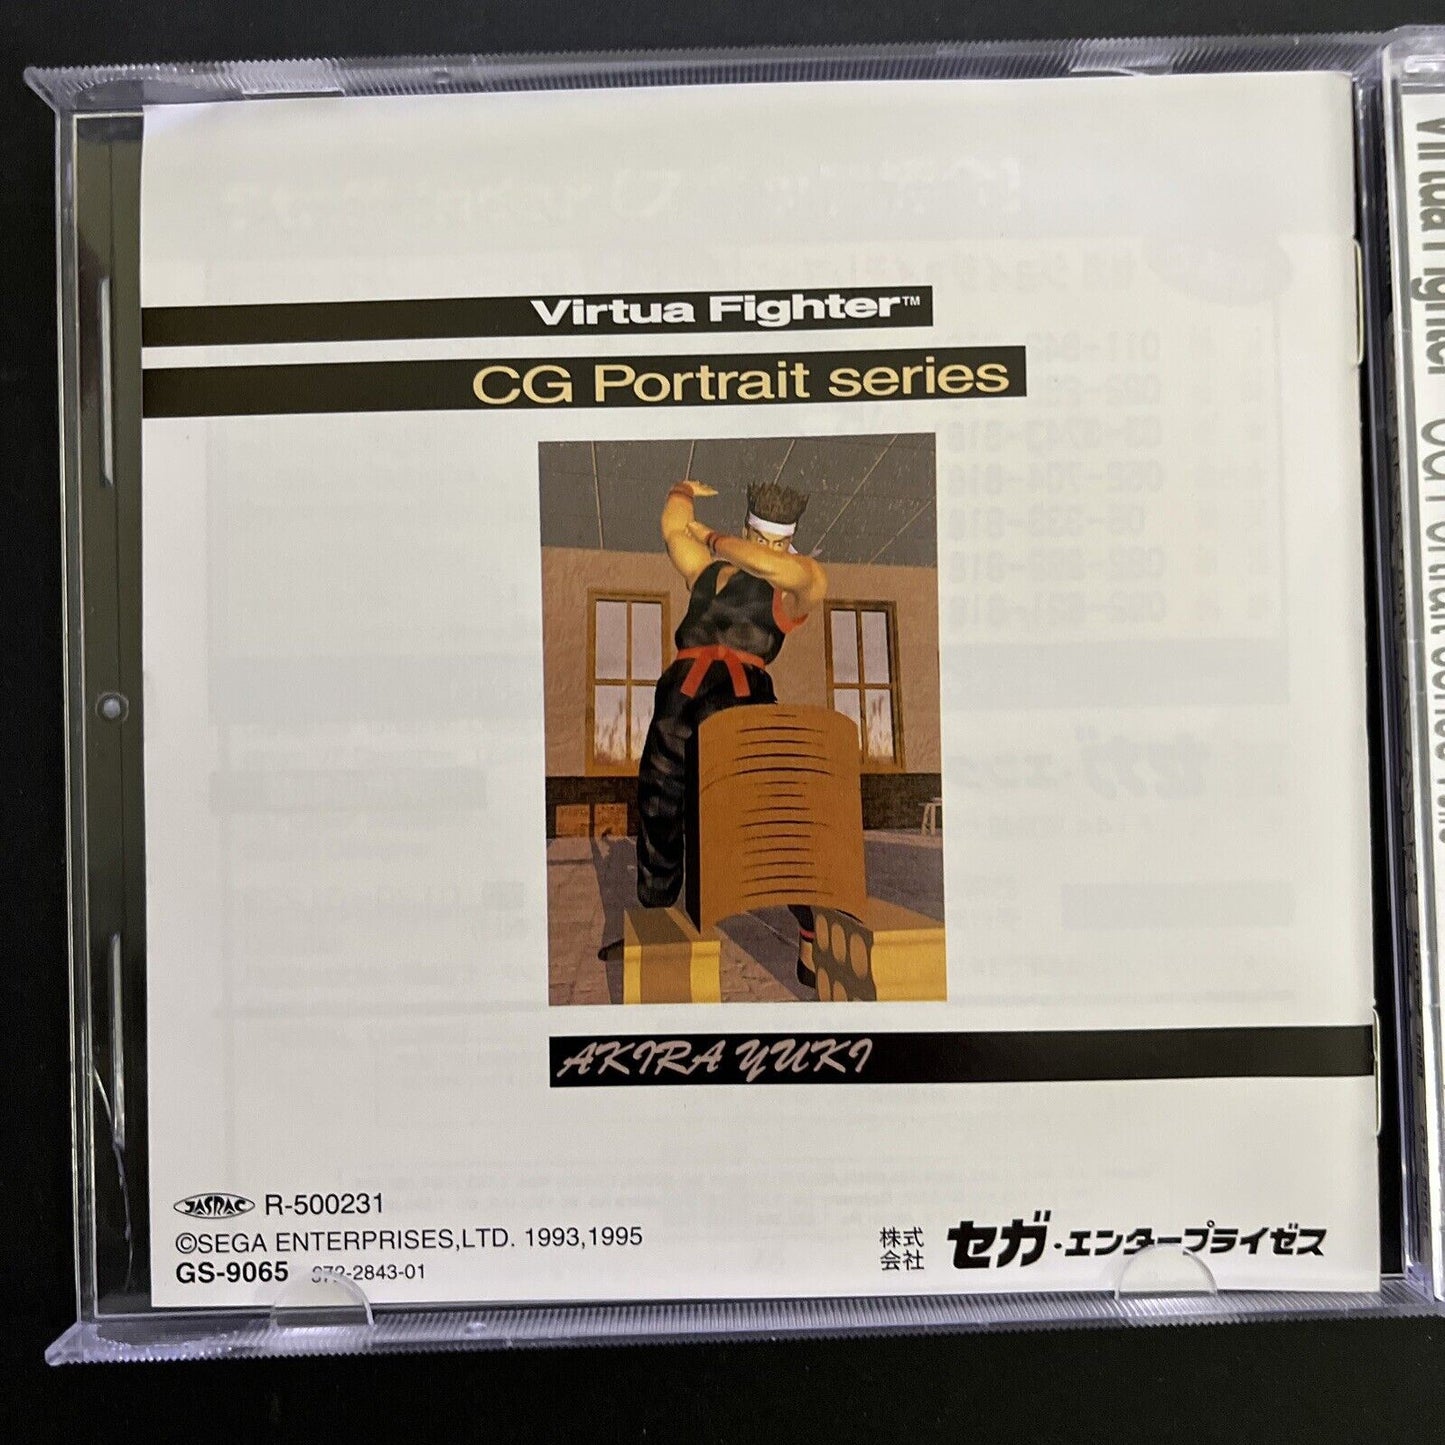 Virtua Fighter CD Portrait Series Akira Yuki - Sega Saturn NTSC-J JAPAN 1995